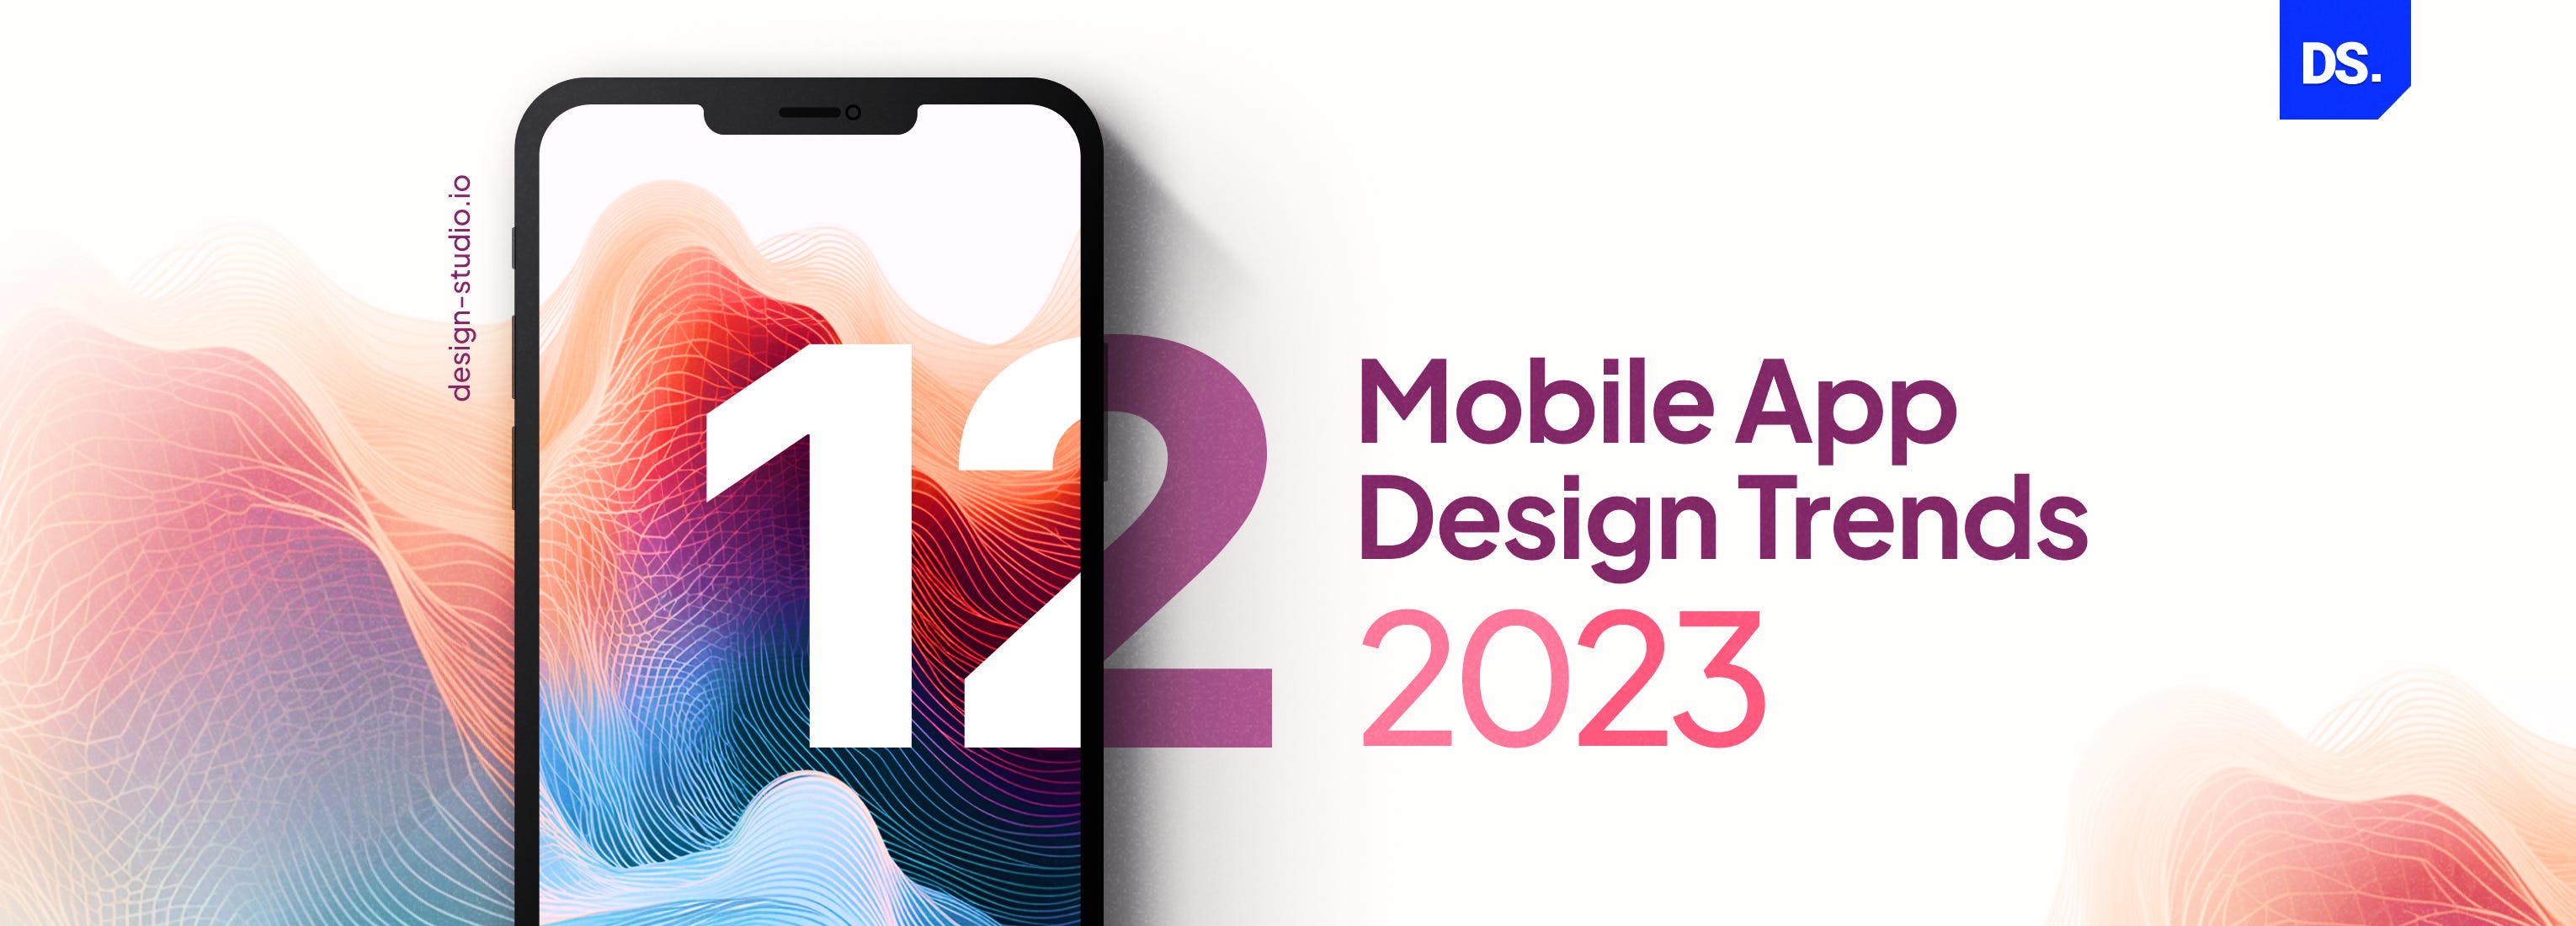 12 Mobile App Design Trends in 2023